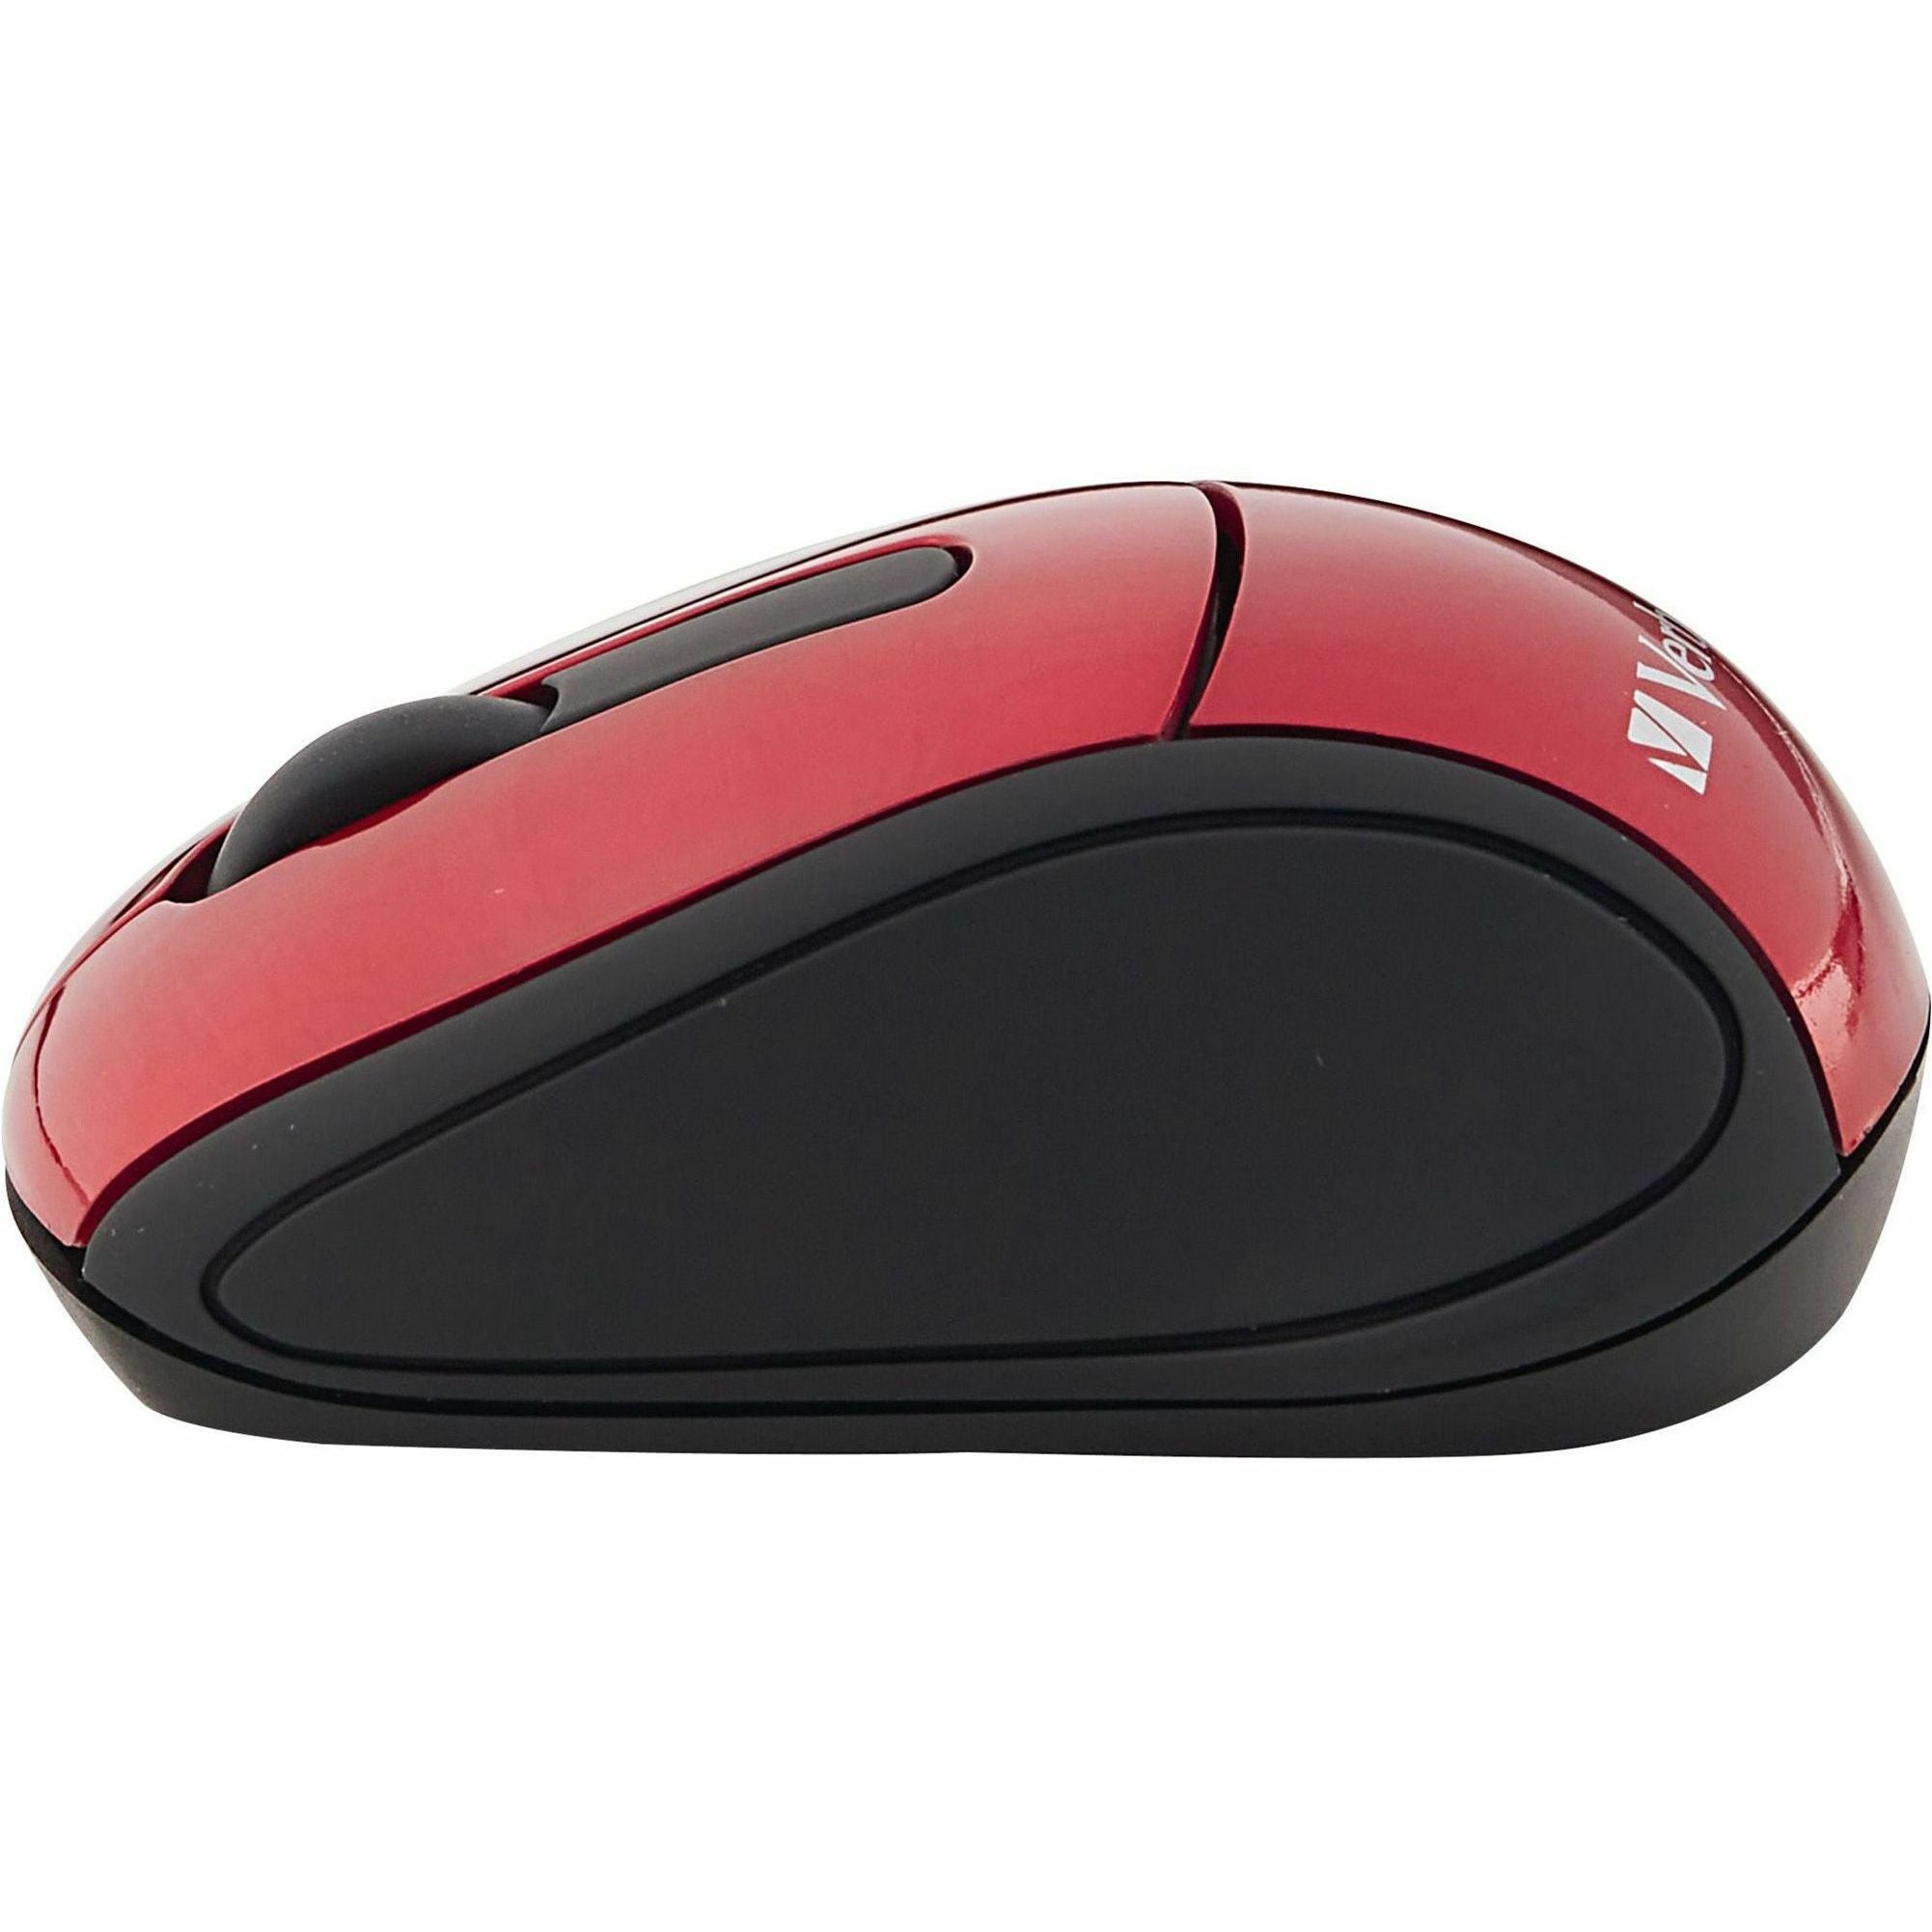 Verbatim Wireless Mini Travel Optical Mouse - Red - Radio Frequency - USB - 1600 dpi - Scroll Wheel - 